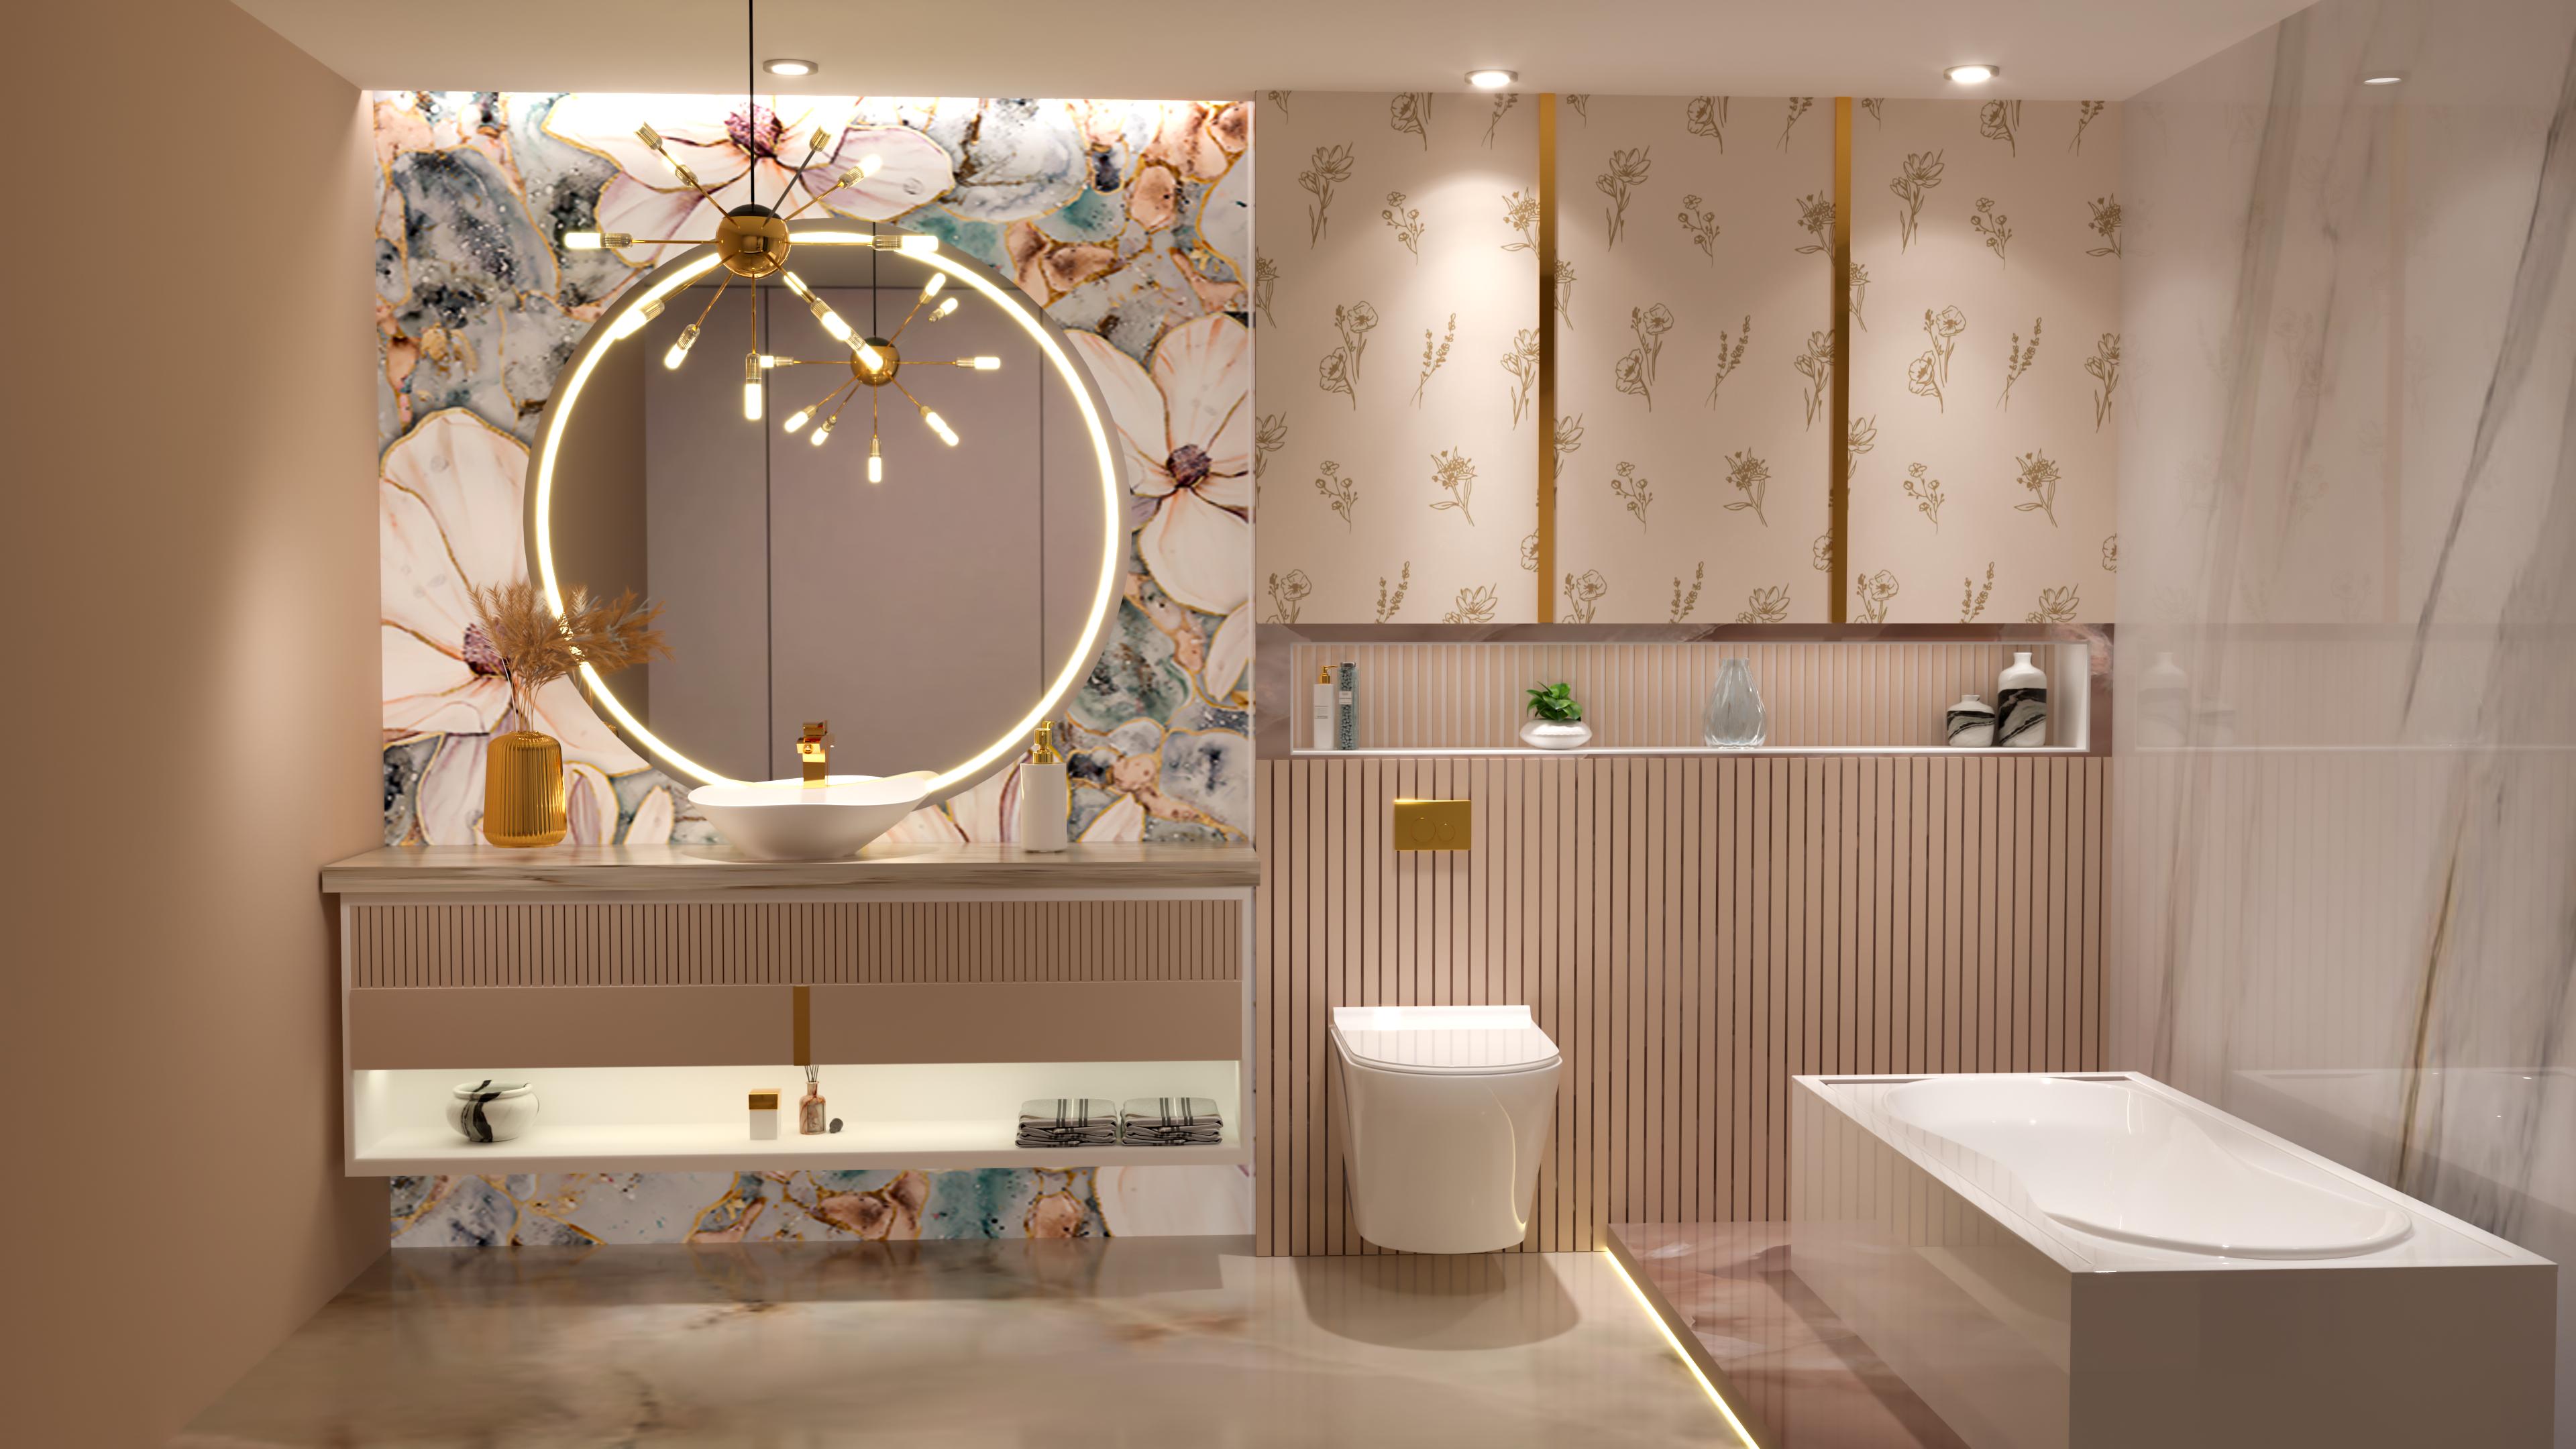 Themes For A Bathroom Design